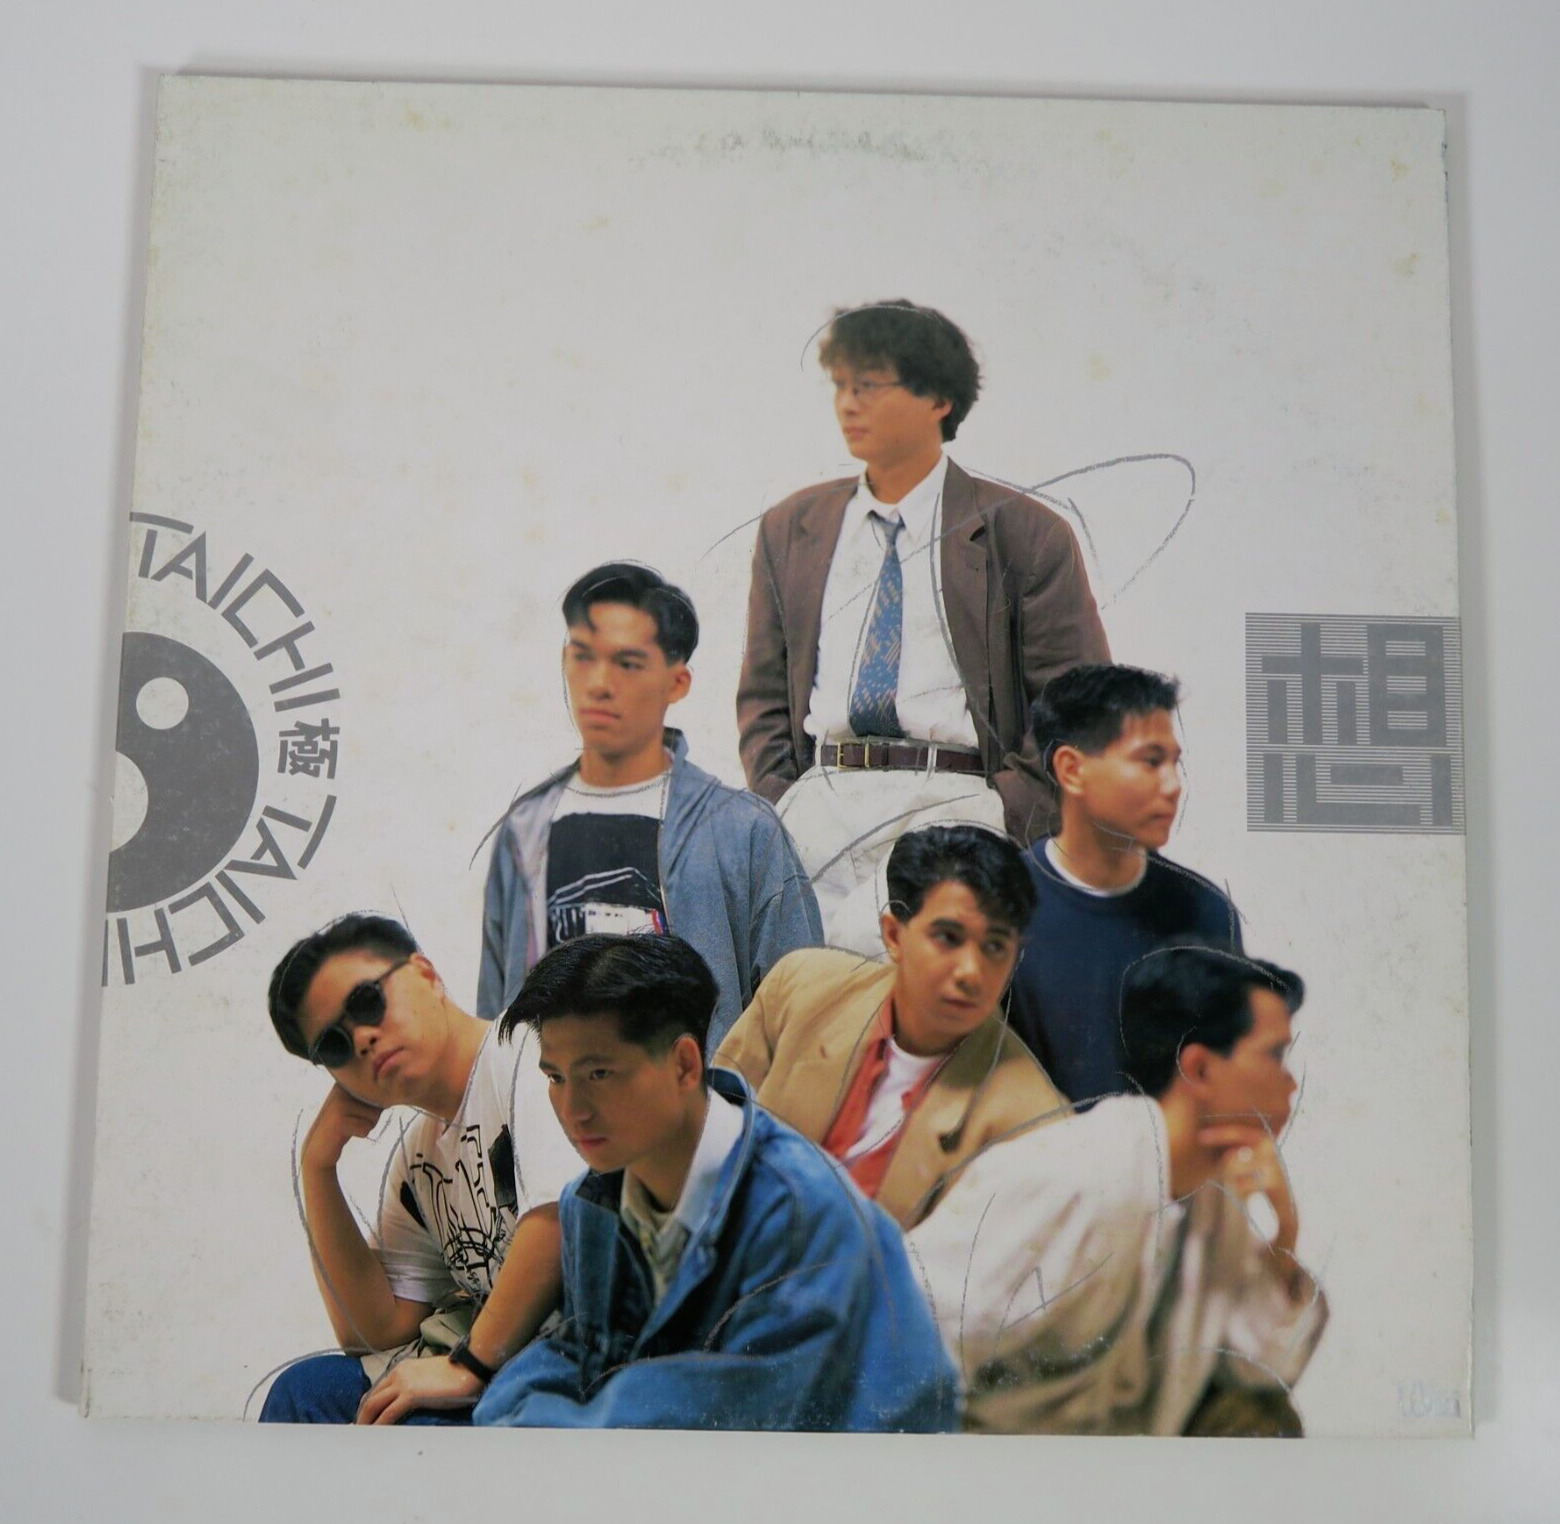 Vintage 1988 Tai Chi WEA Records w/ Lyrics Sheet Chinese Pop Vinyl 33 PROMO LP